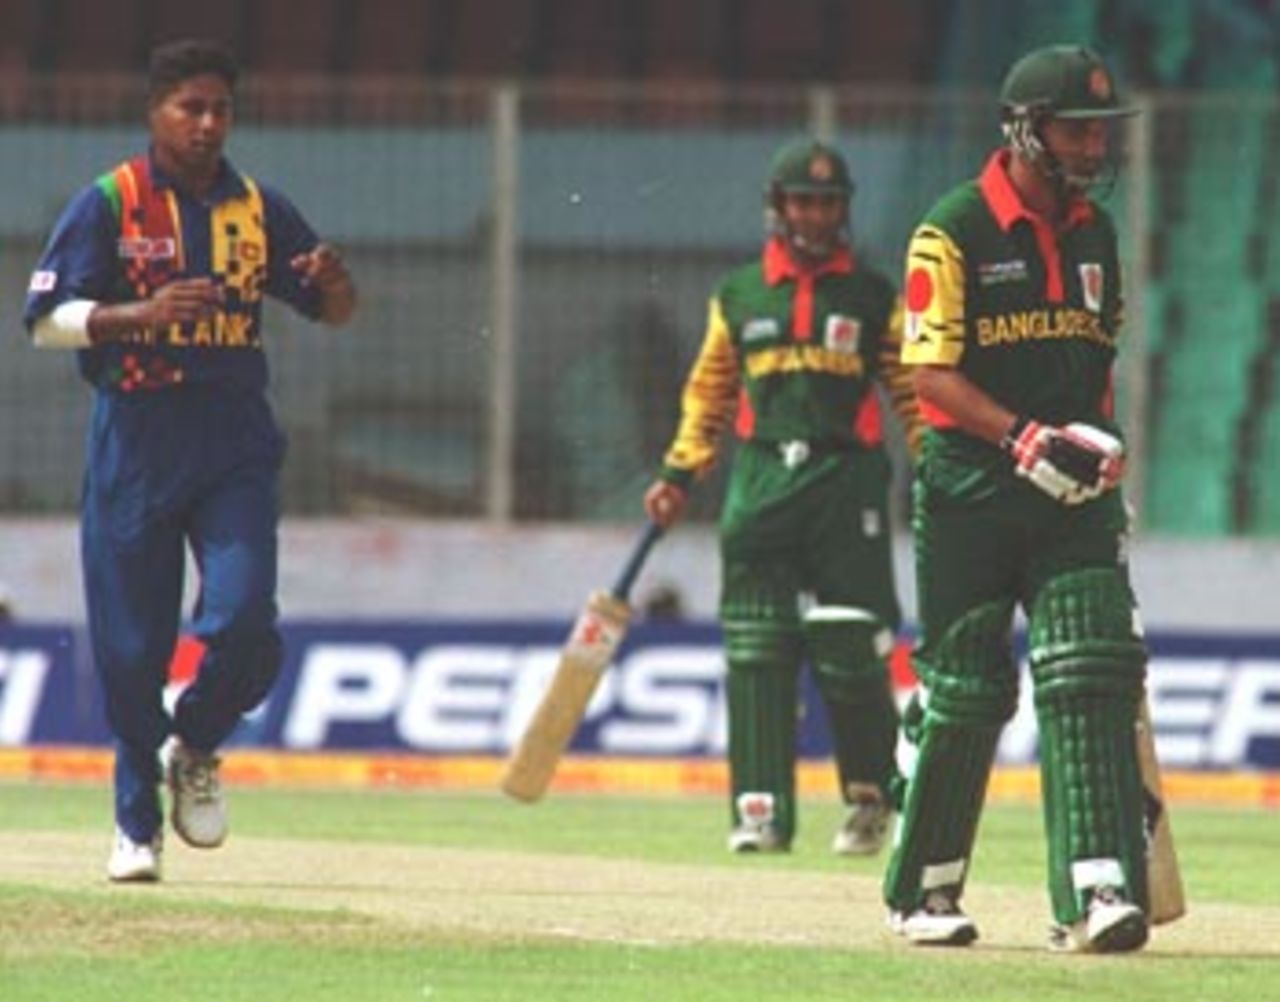 Shahriar Hossain departs after being caught by De Silva off the bowling of Vaas, Asia Cup 1999/00, Bangladesh v Sri Lanka, Bangabandhu National Stadium, Dhaka